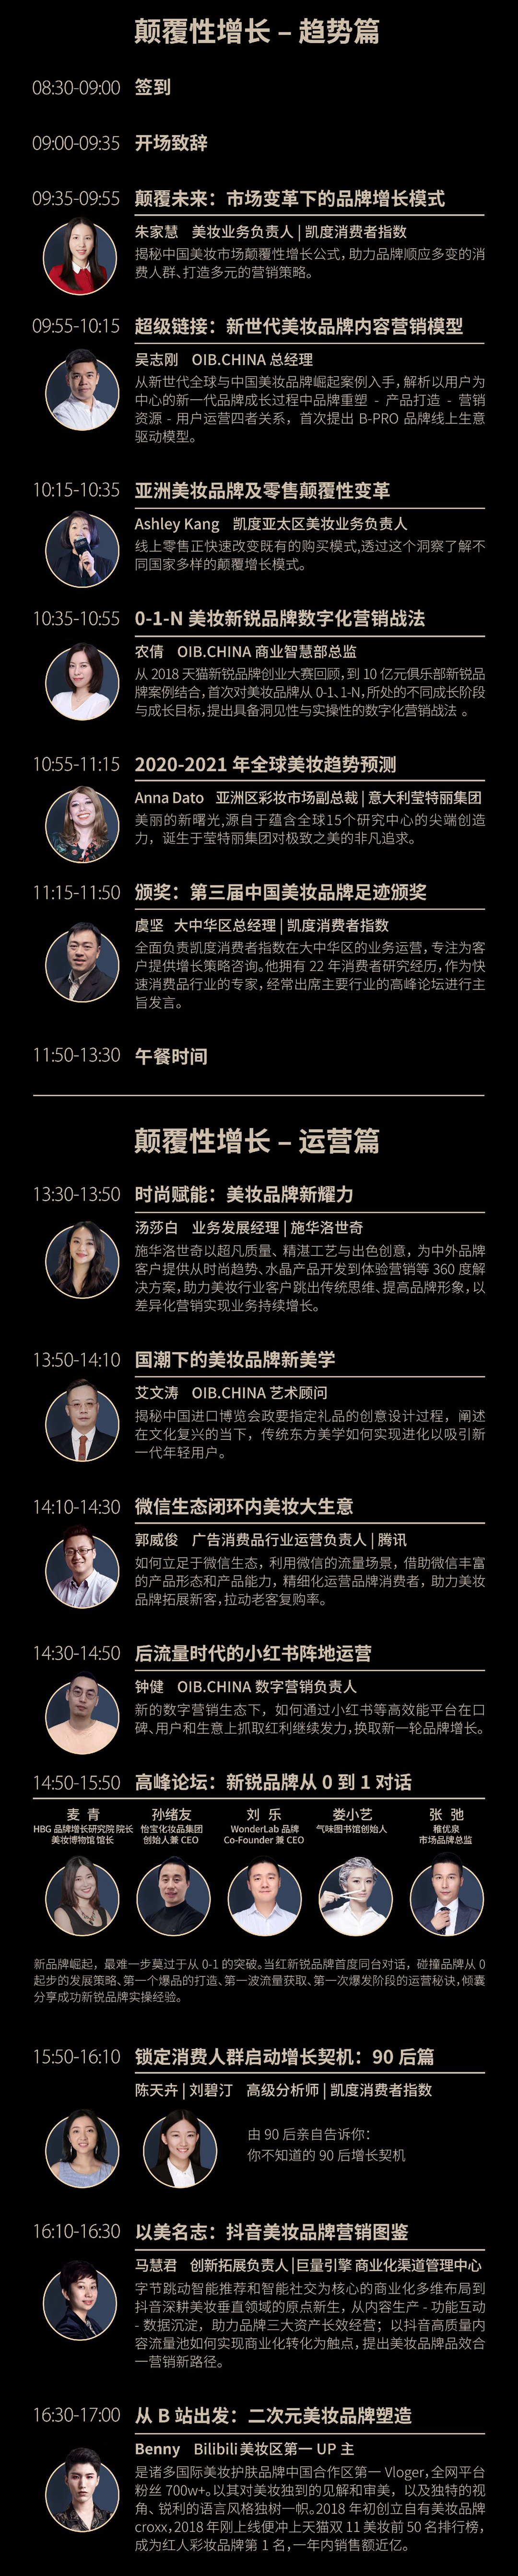 2019 CBF中国化妆品市场年会（上海）